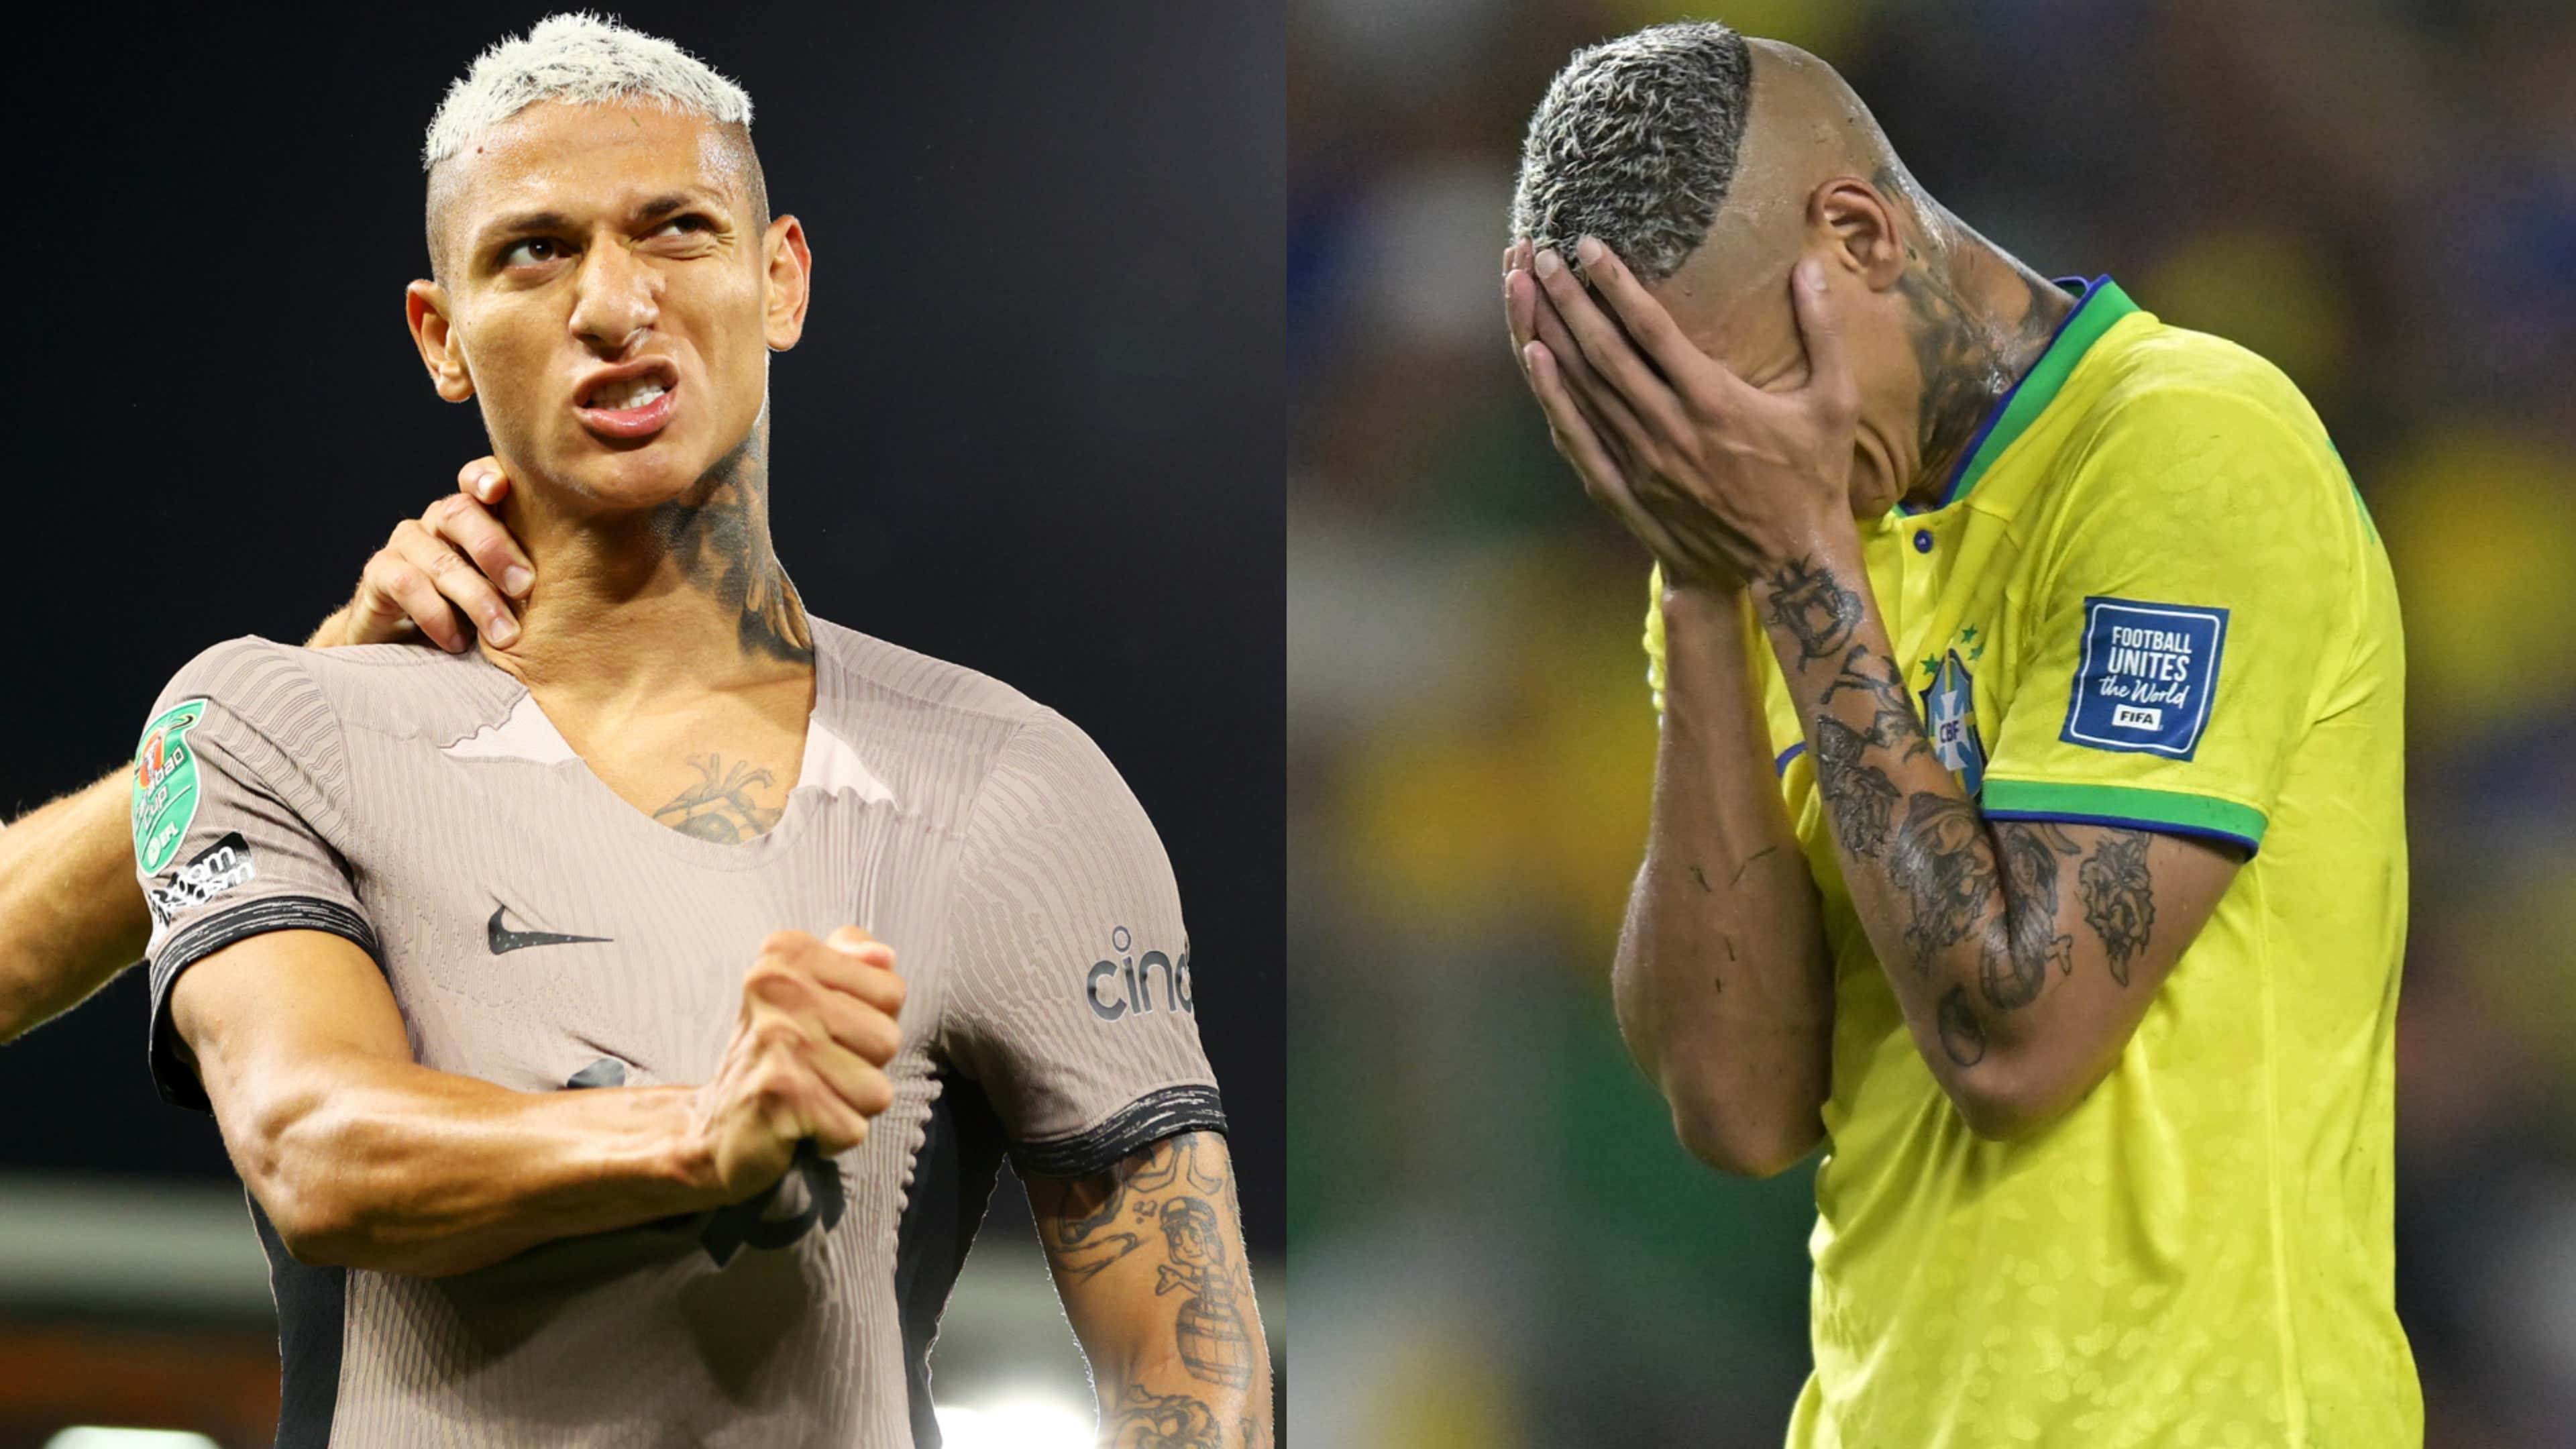 Deal prevents player strike in Brazilian soccer league